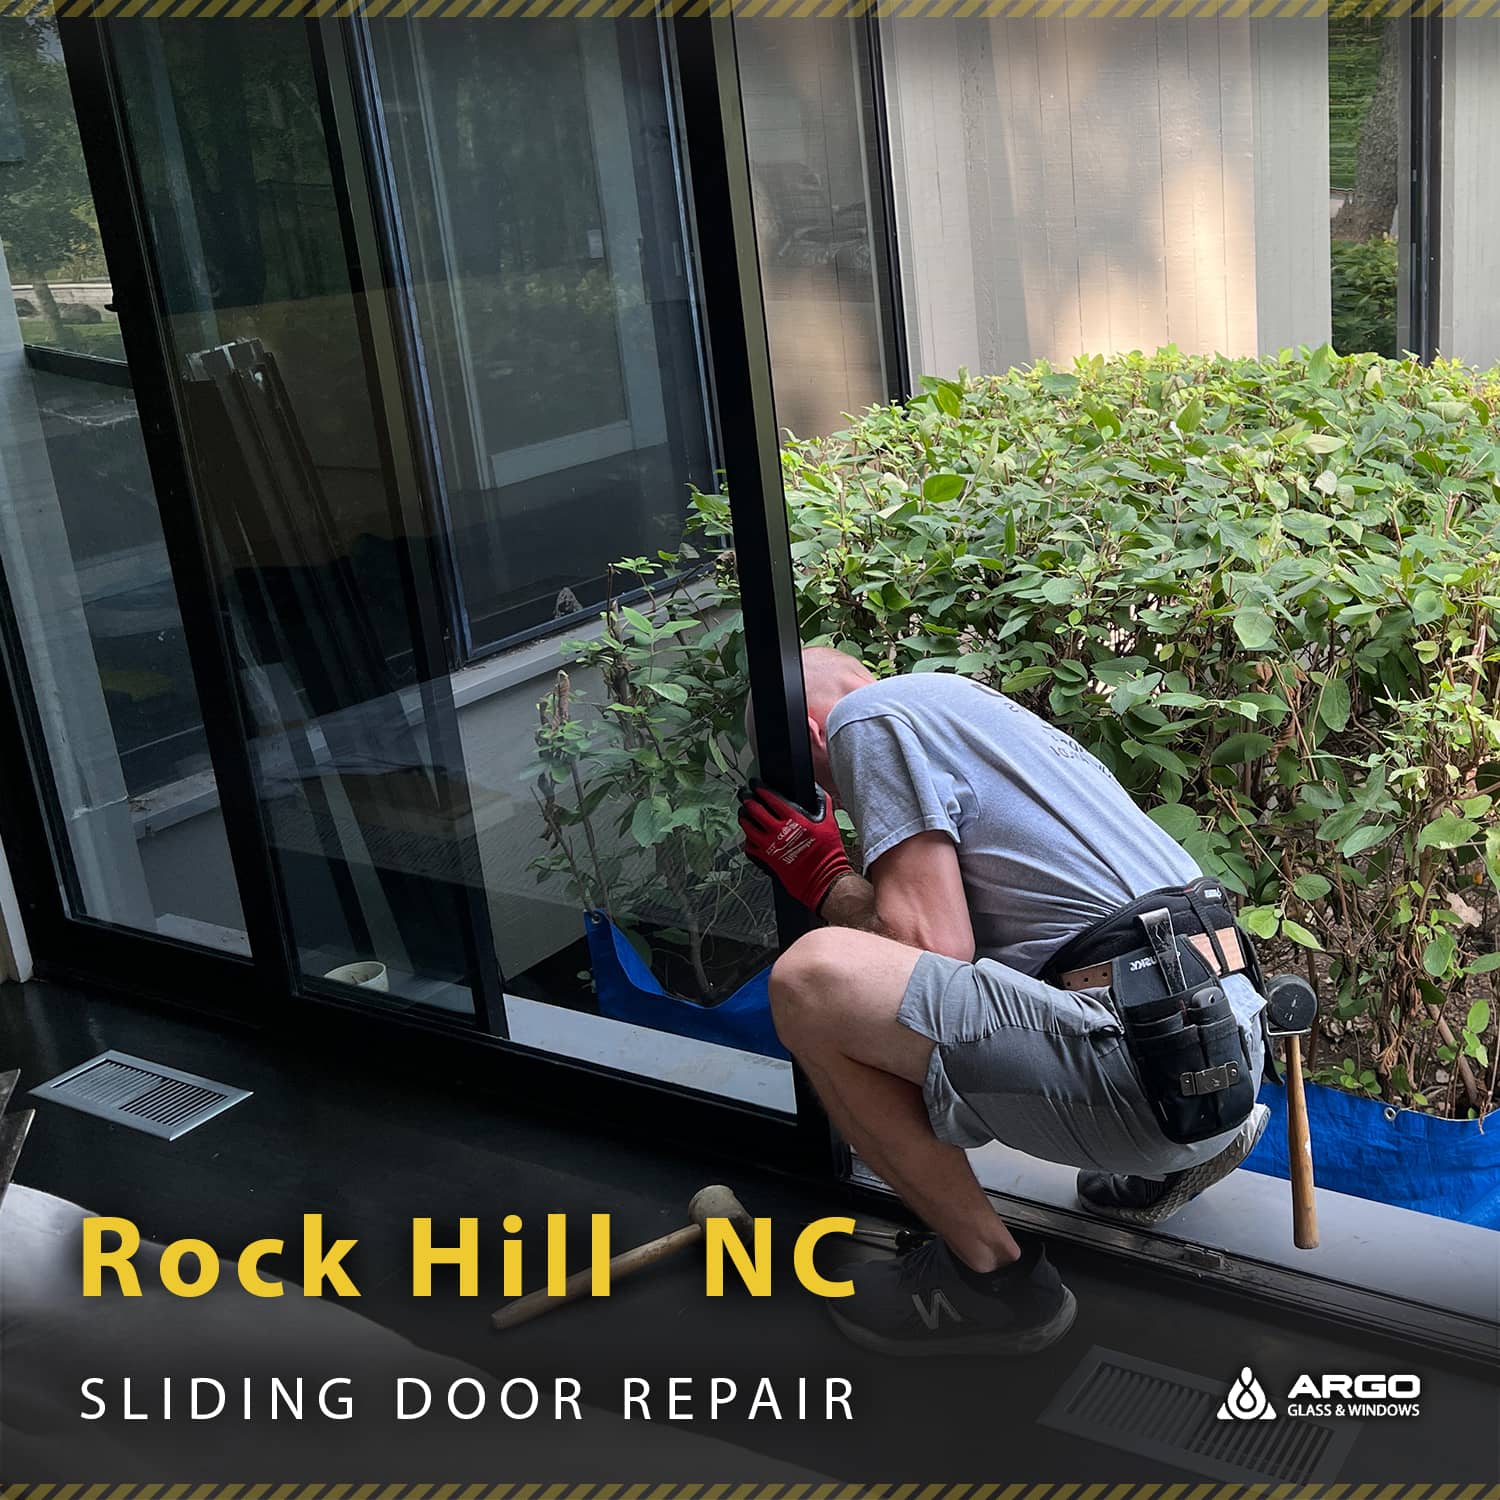 Professional Sliding Door Repair company